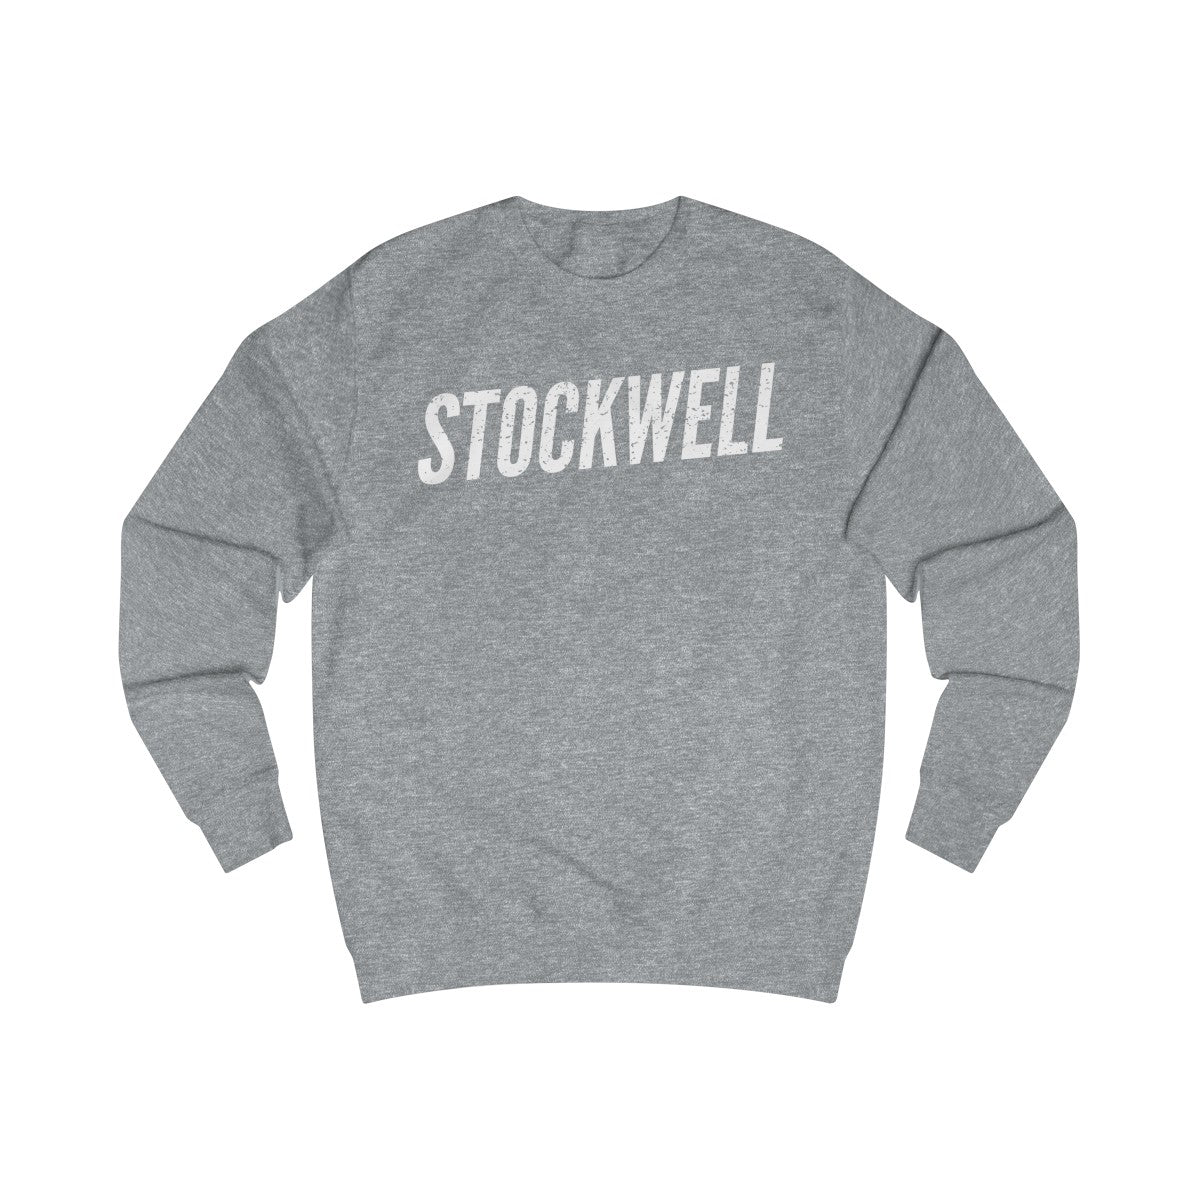 Stockwell Sweater